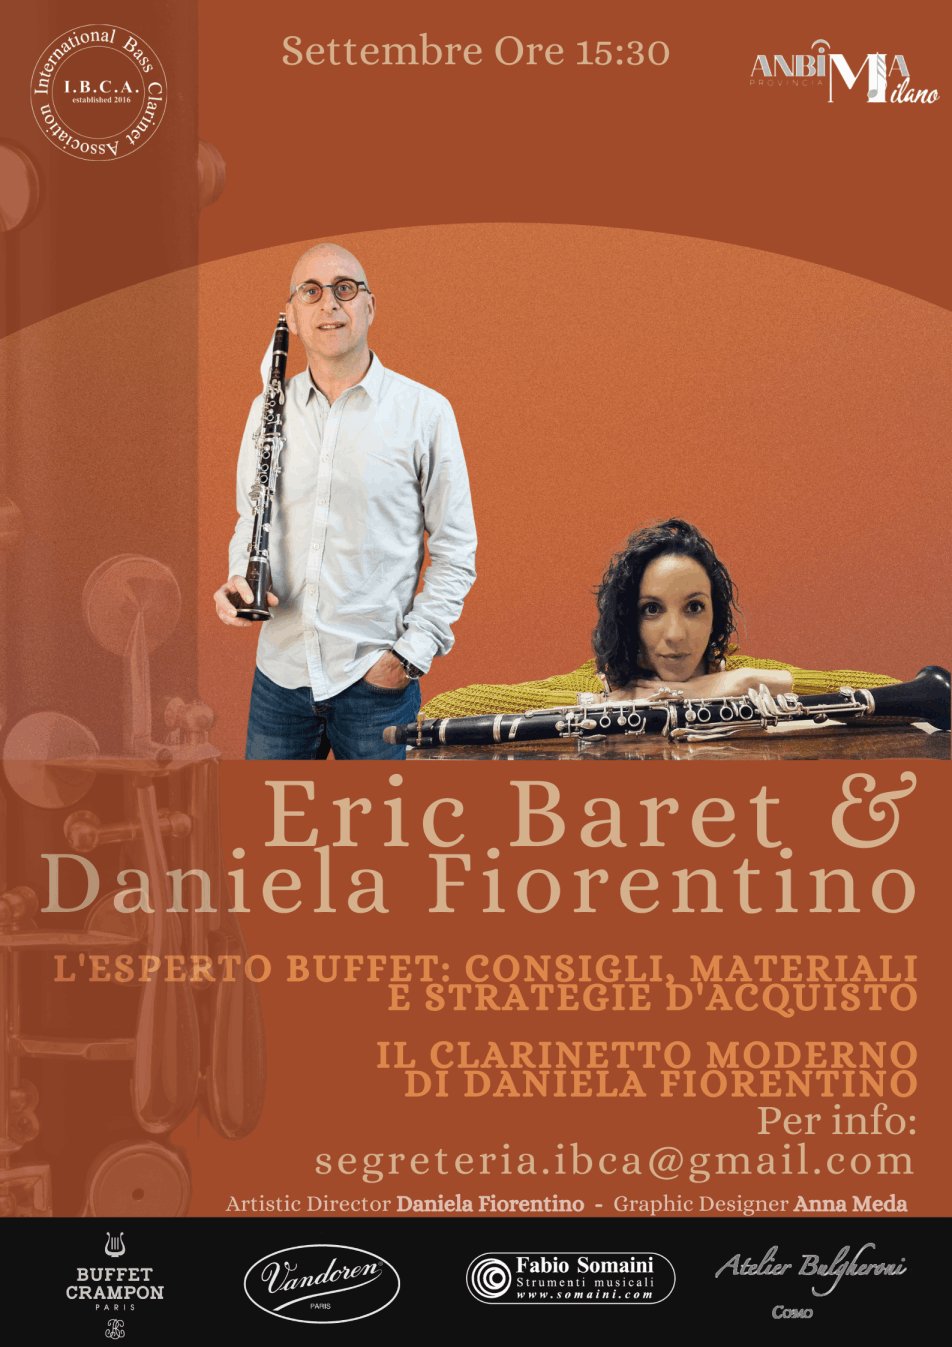 Eric Baret & Daniela Fiorentino